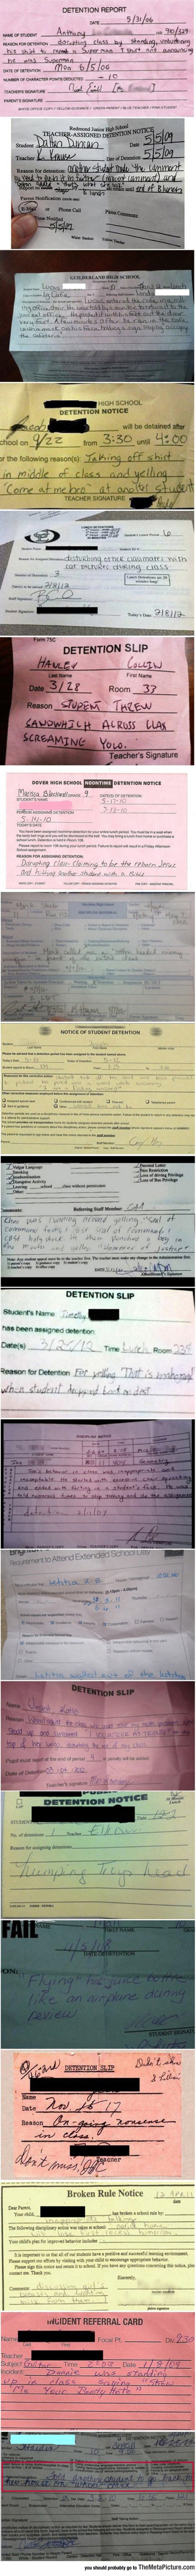 Detention Slips Nowadays